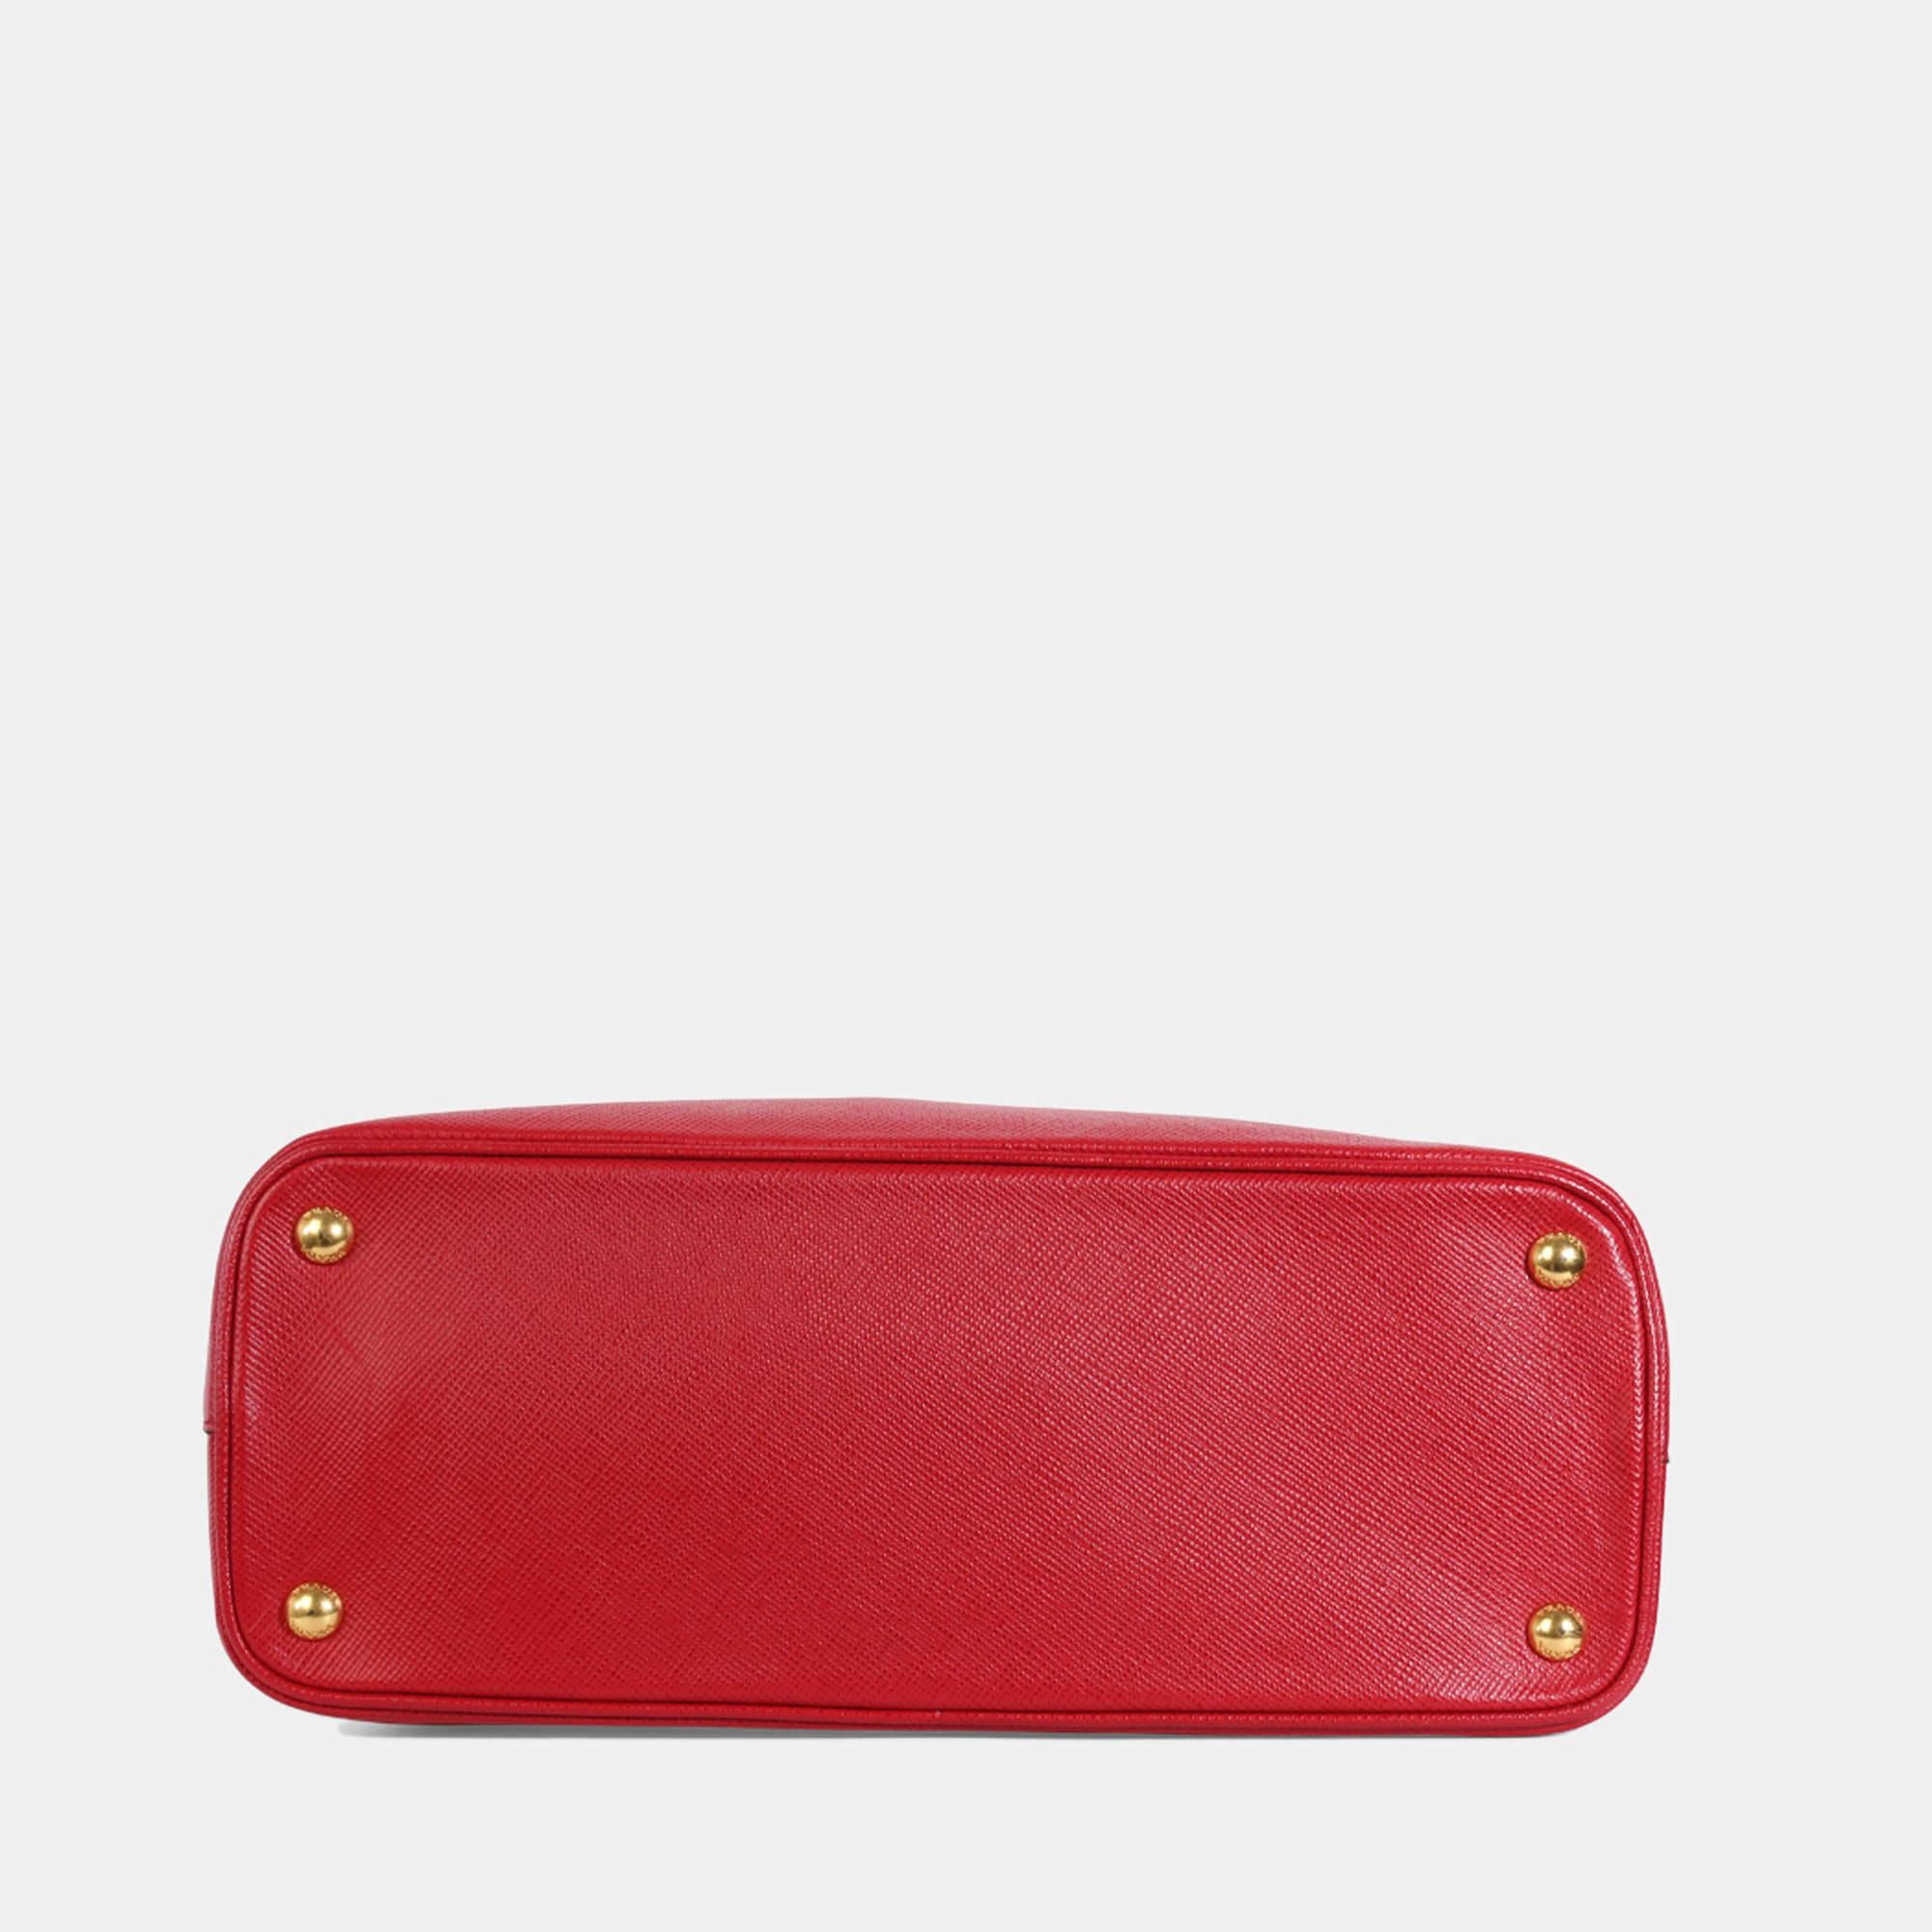 Women's Prada Red Saffiano Leather Medium Dome Satchel Bag For Sale